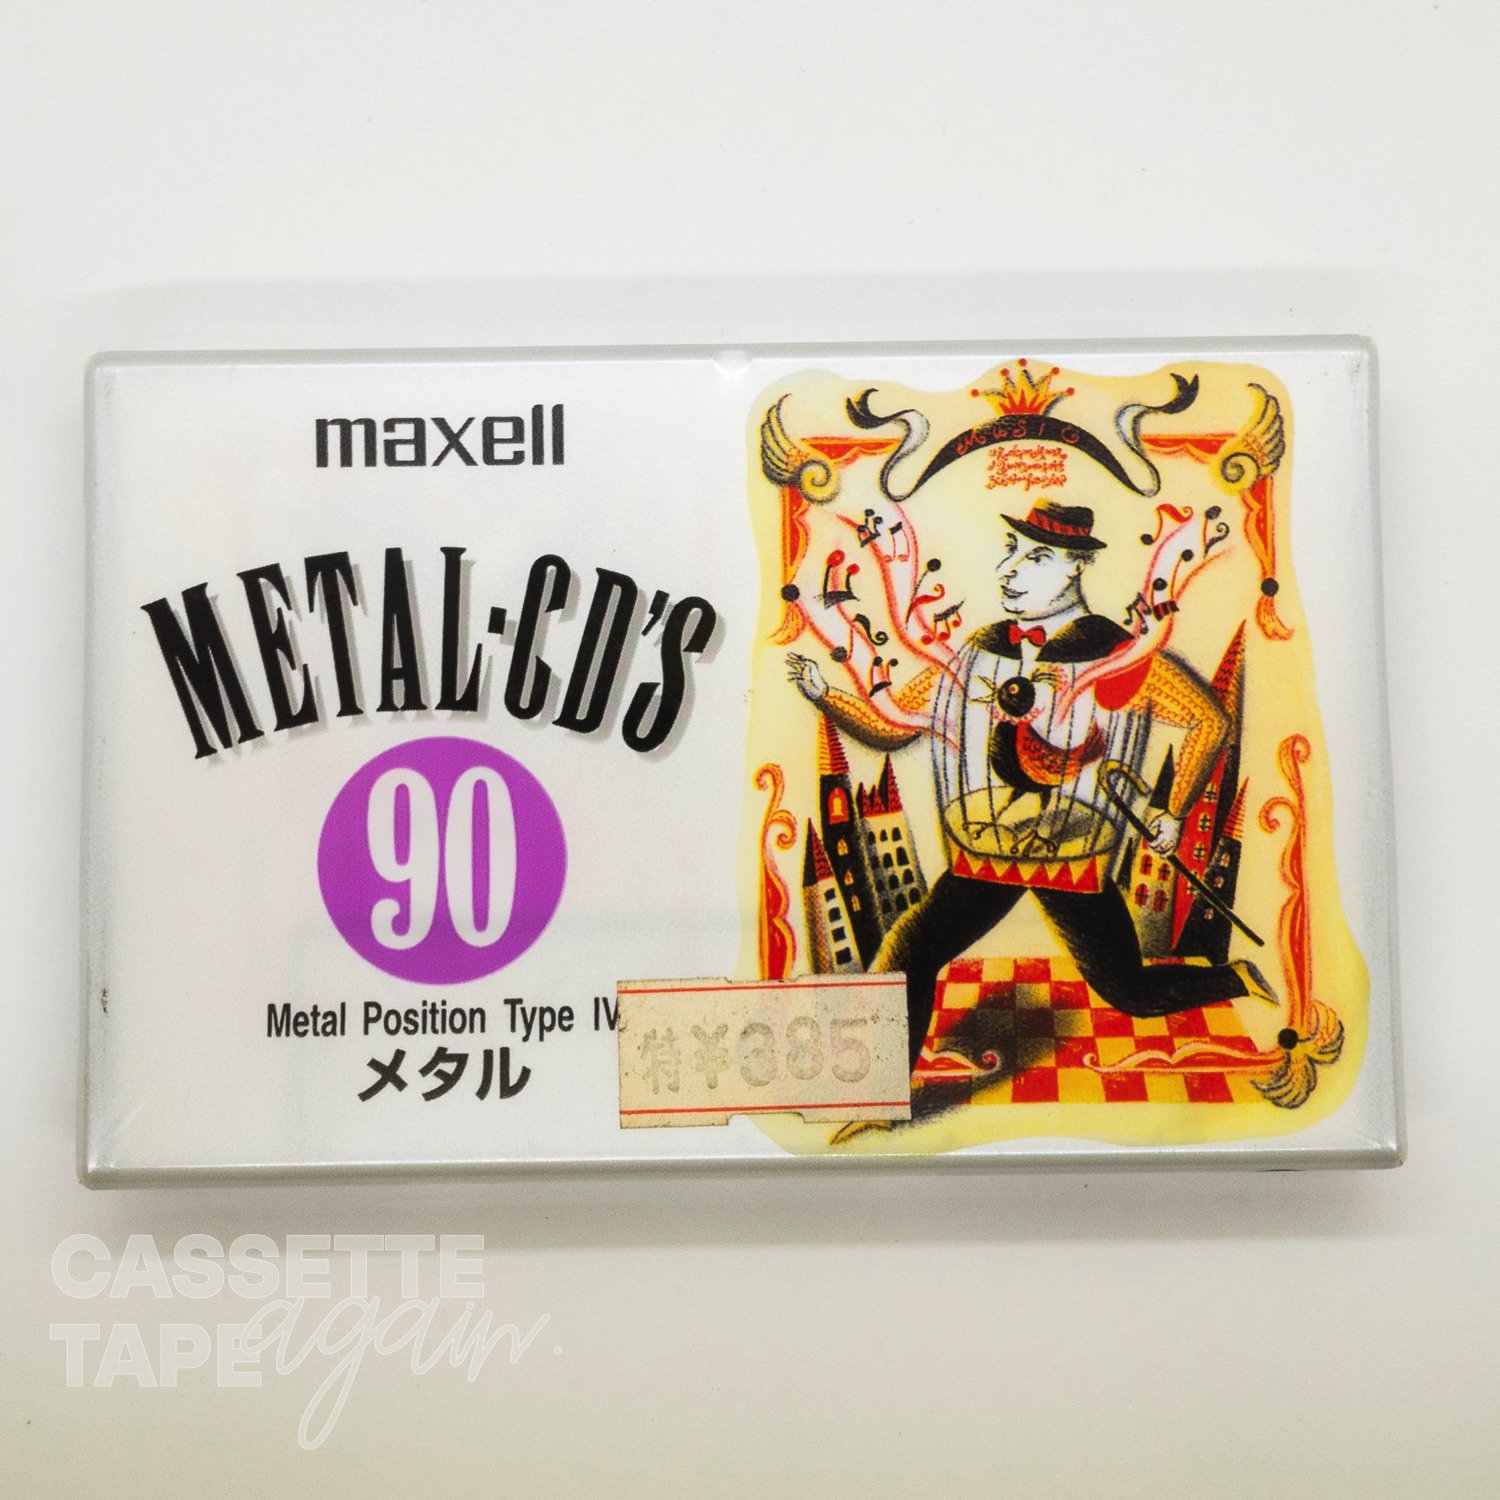 METAL CD’s 90 / maxell(メタル)